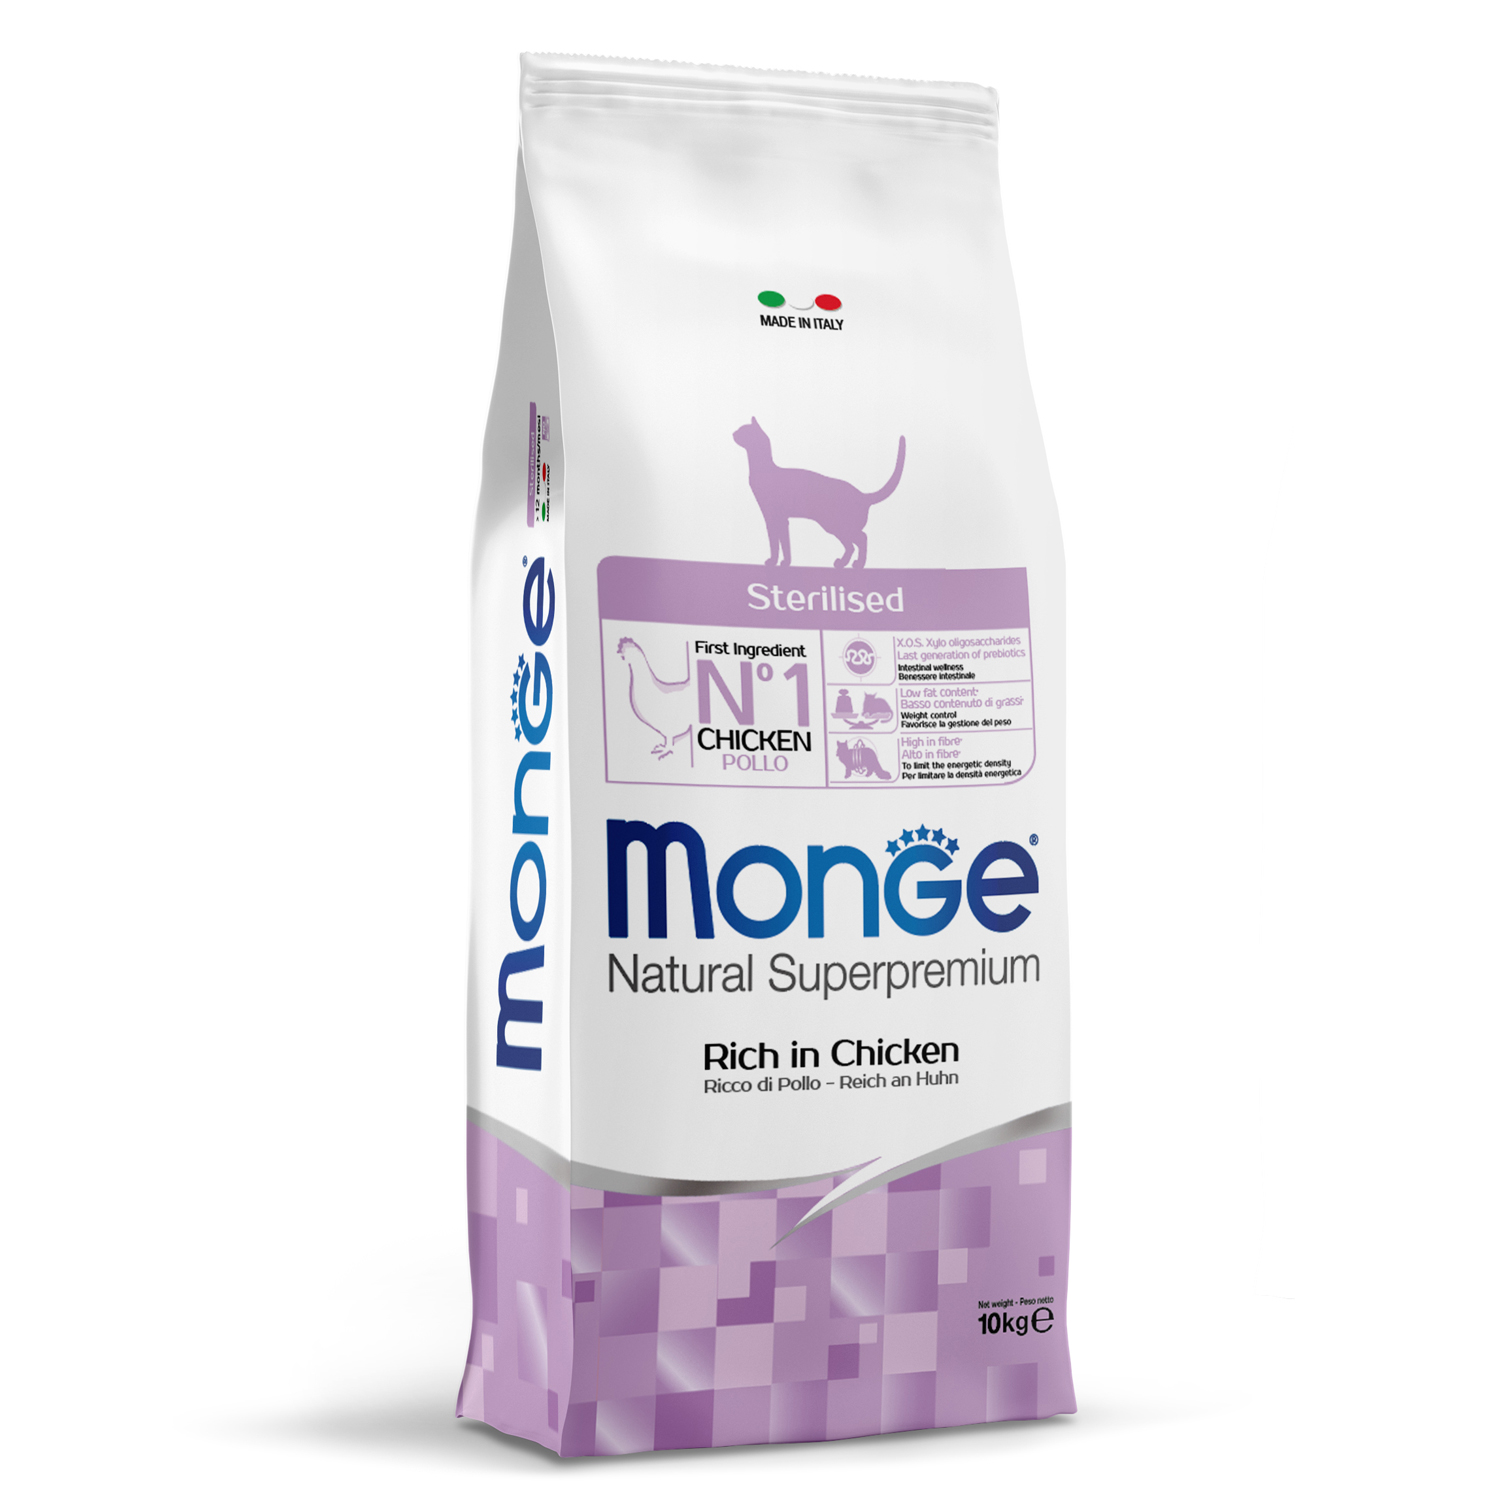 Monge Cat Sterilised корм для стерилизованных кошек 10 кг